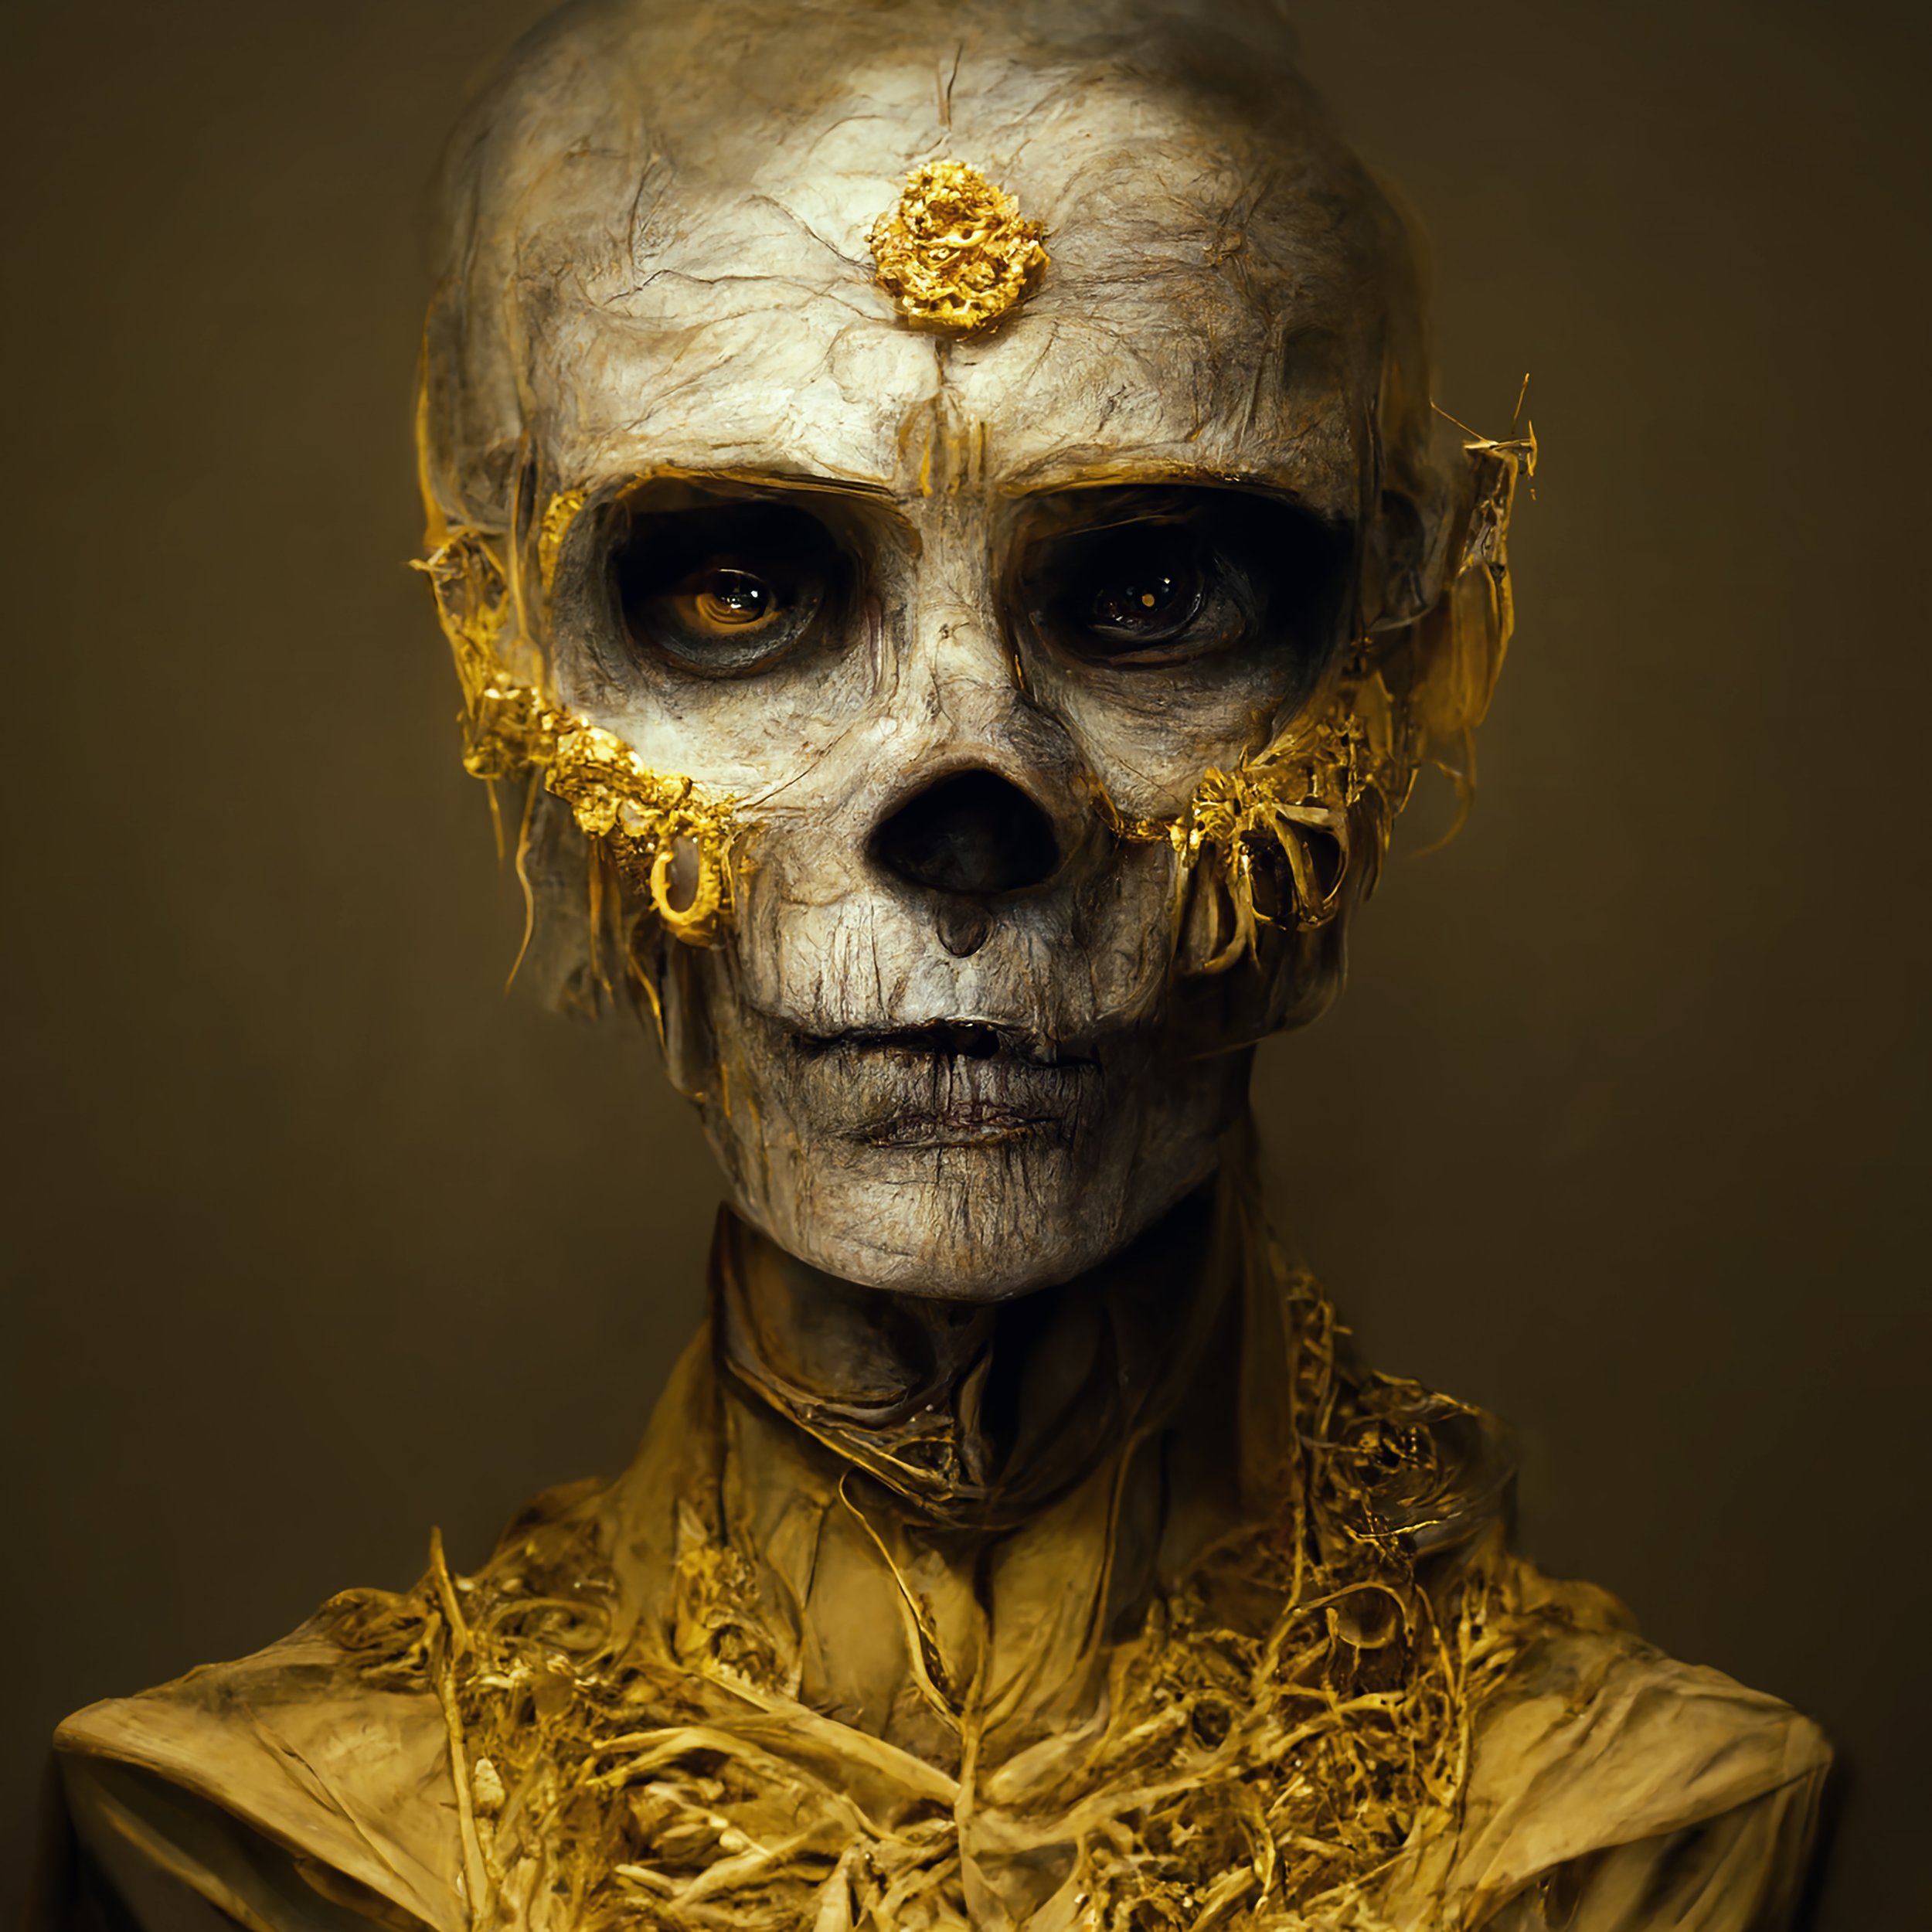 BrilliantImages_underground_skeleton_wearing_gold_d80bc58c-479e-4a7c-a590-995461b1cd73 copy.jpg